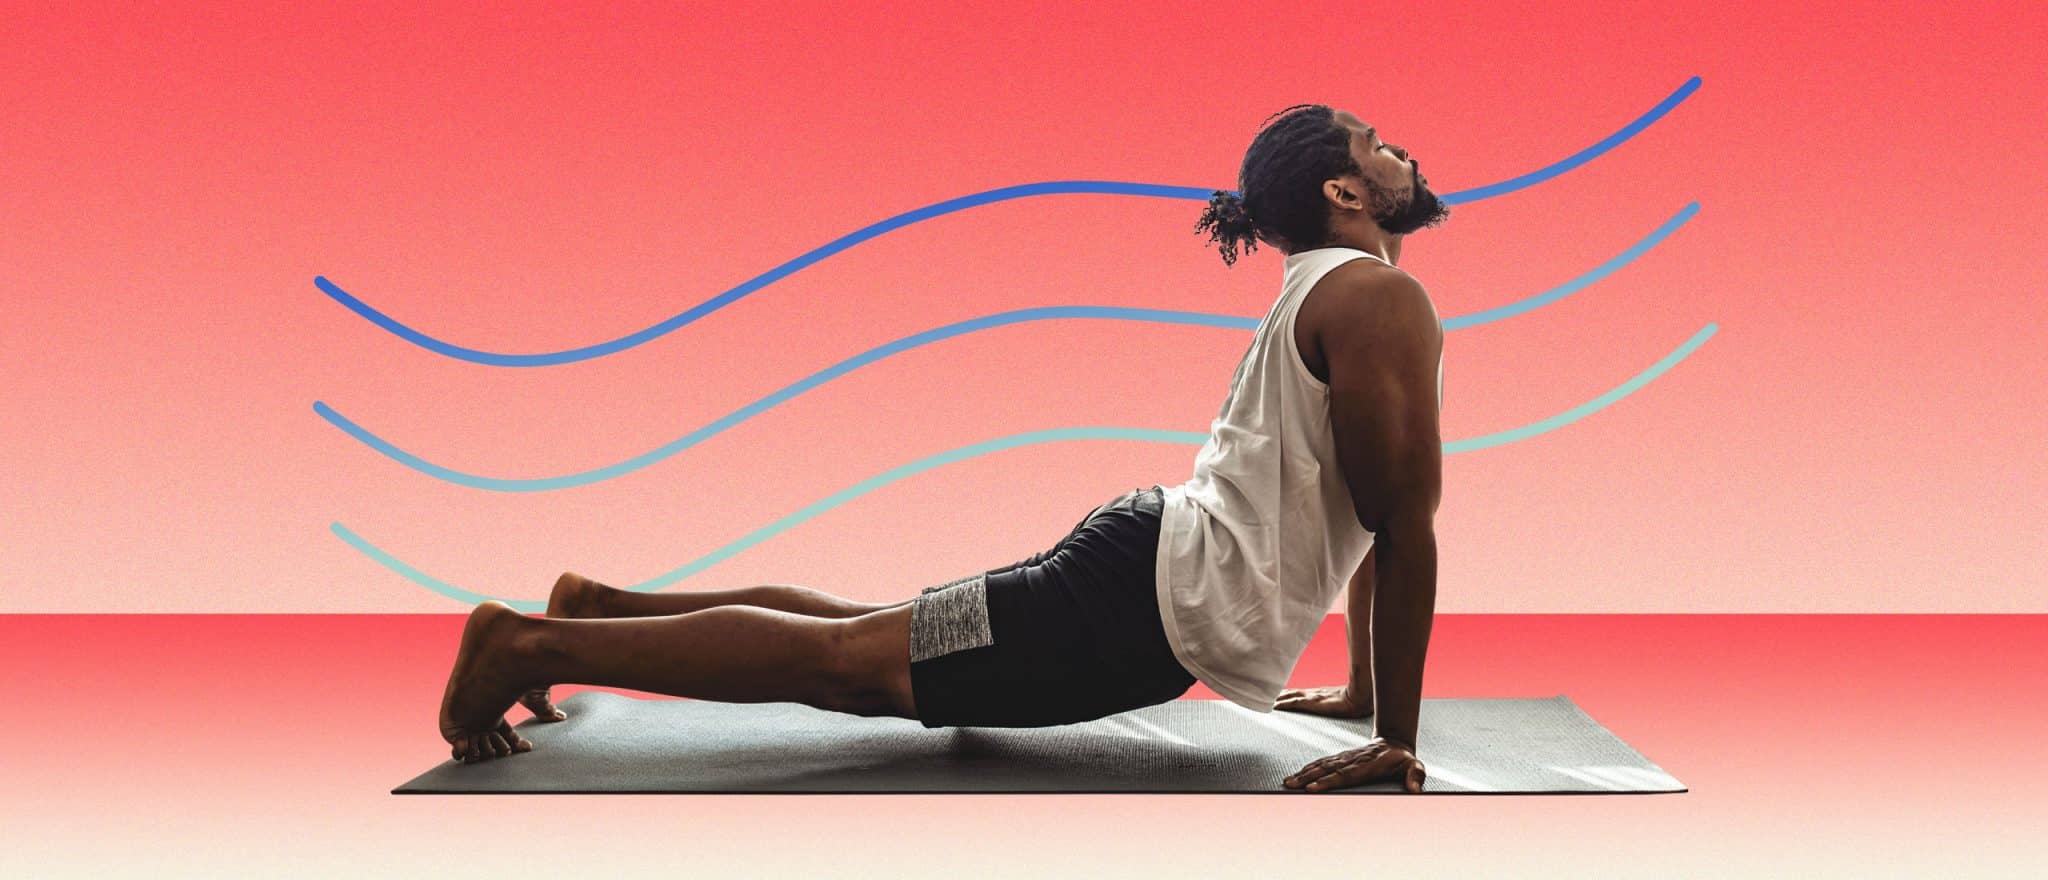 5 Yoga Benefits That Make Hitting the Mat a No-Brainer